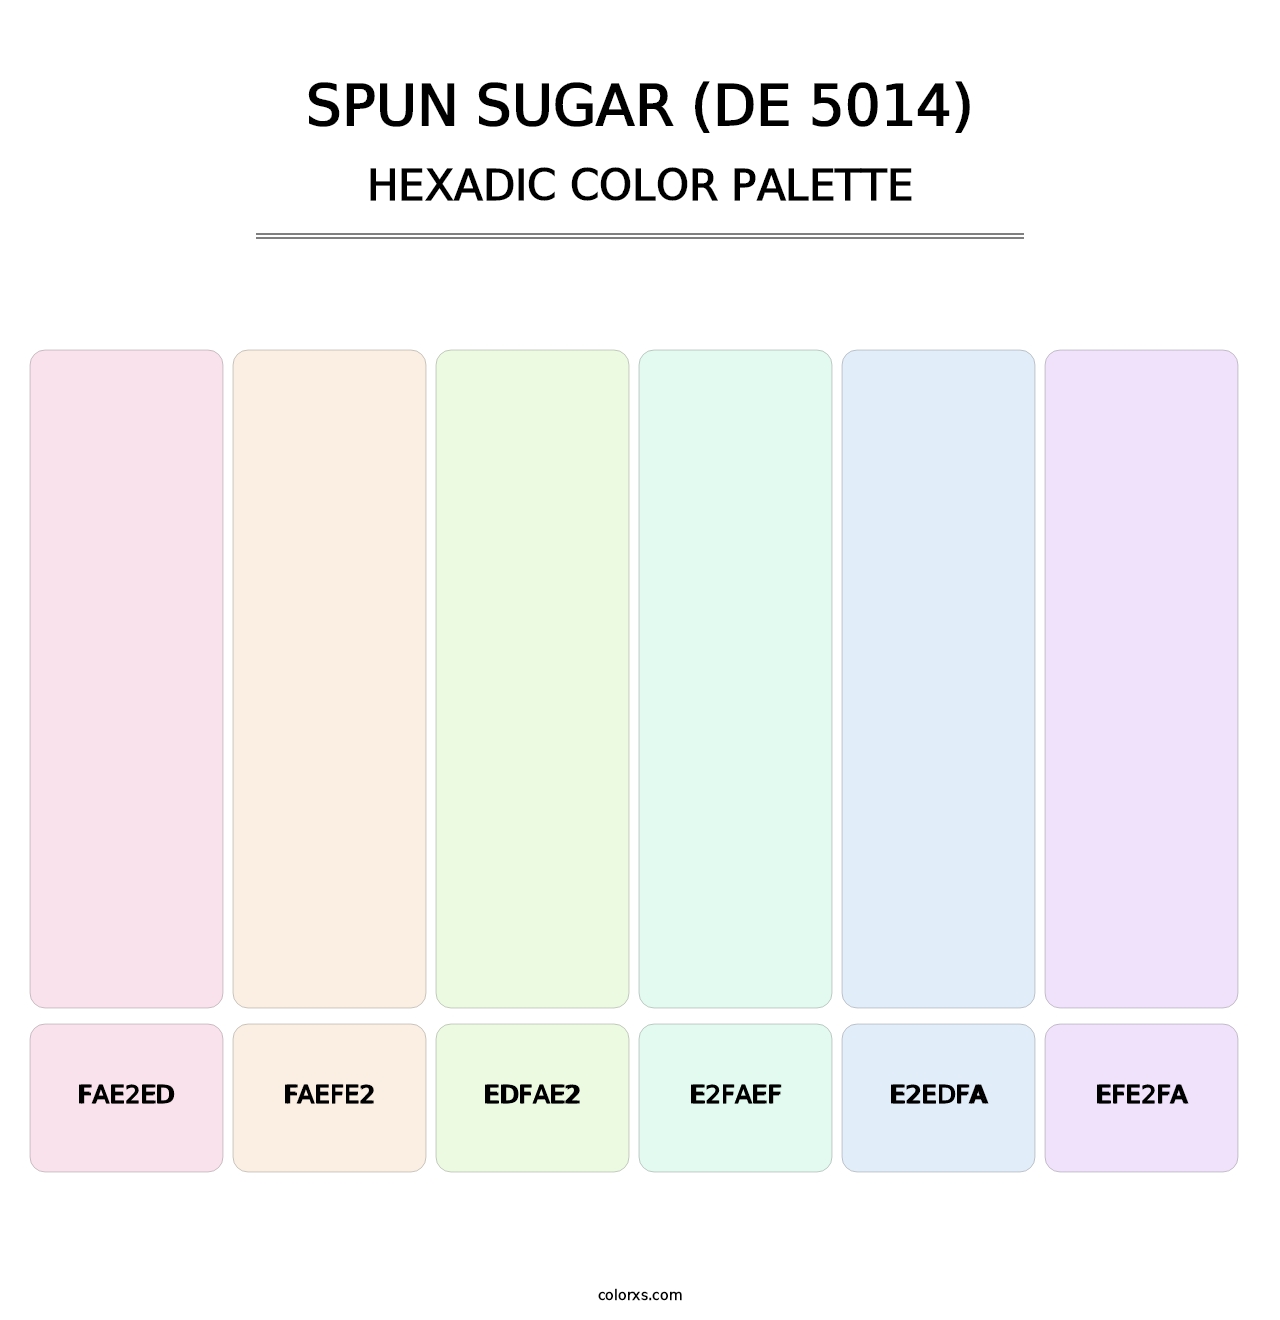 Spun Sugar (DE 5014) - Hexadic Color Palette